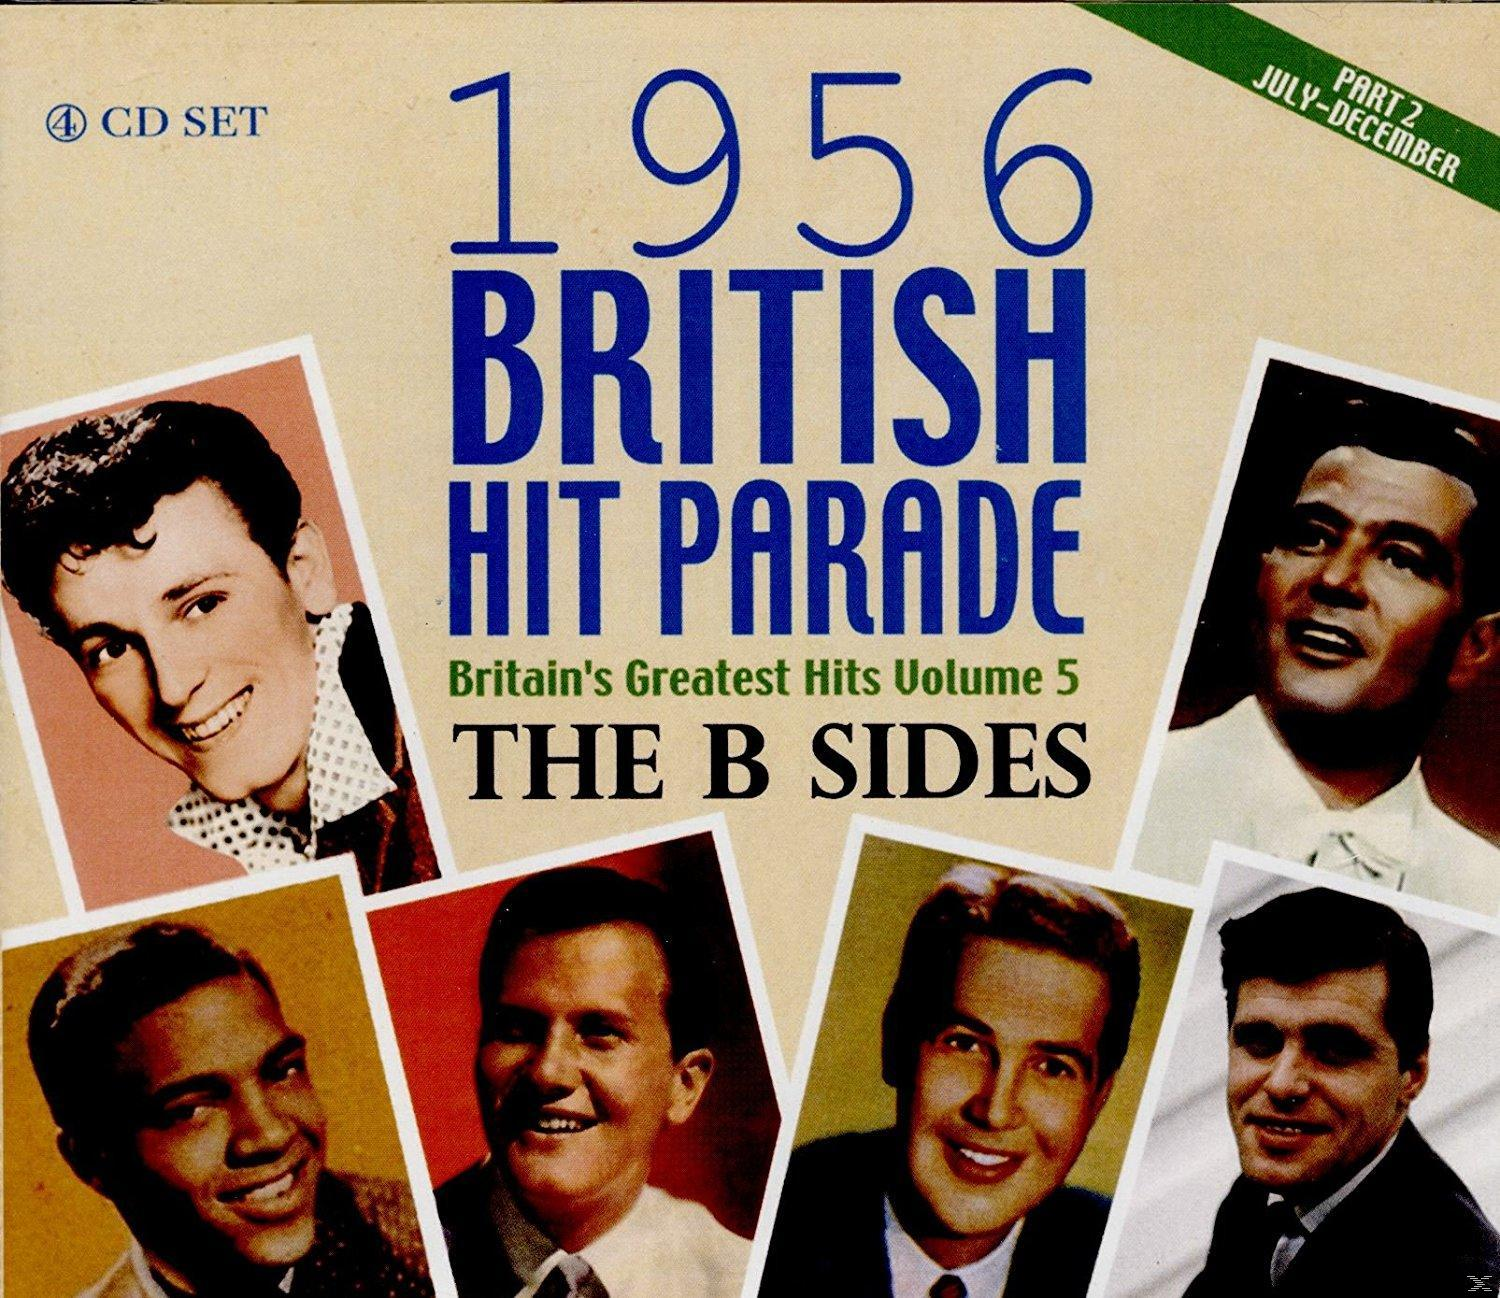 VARIOUS - The 1956 British (CD) Part - 2 B Parade Sides The Hit